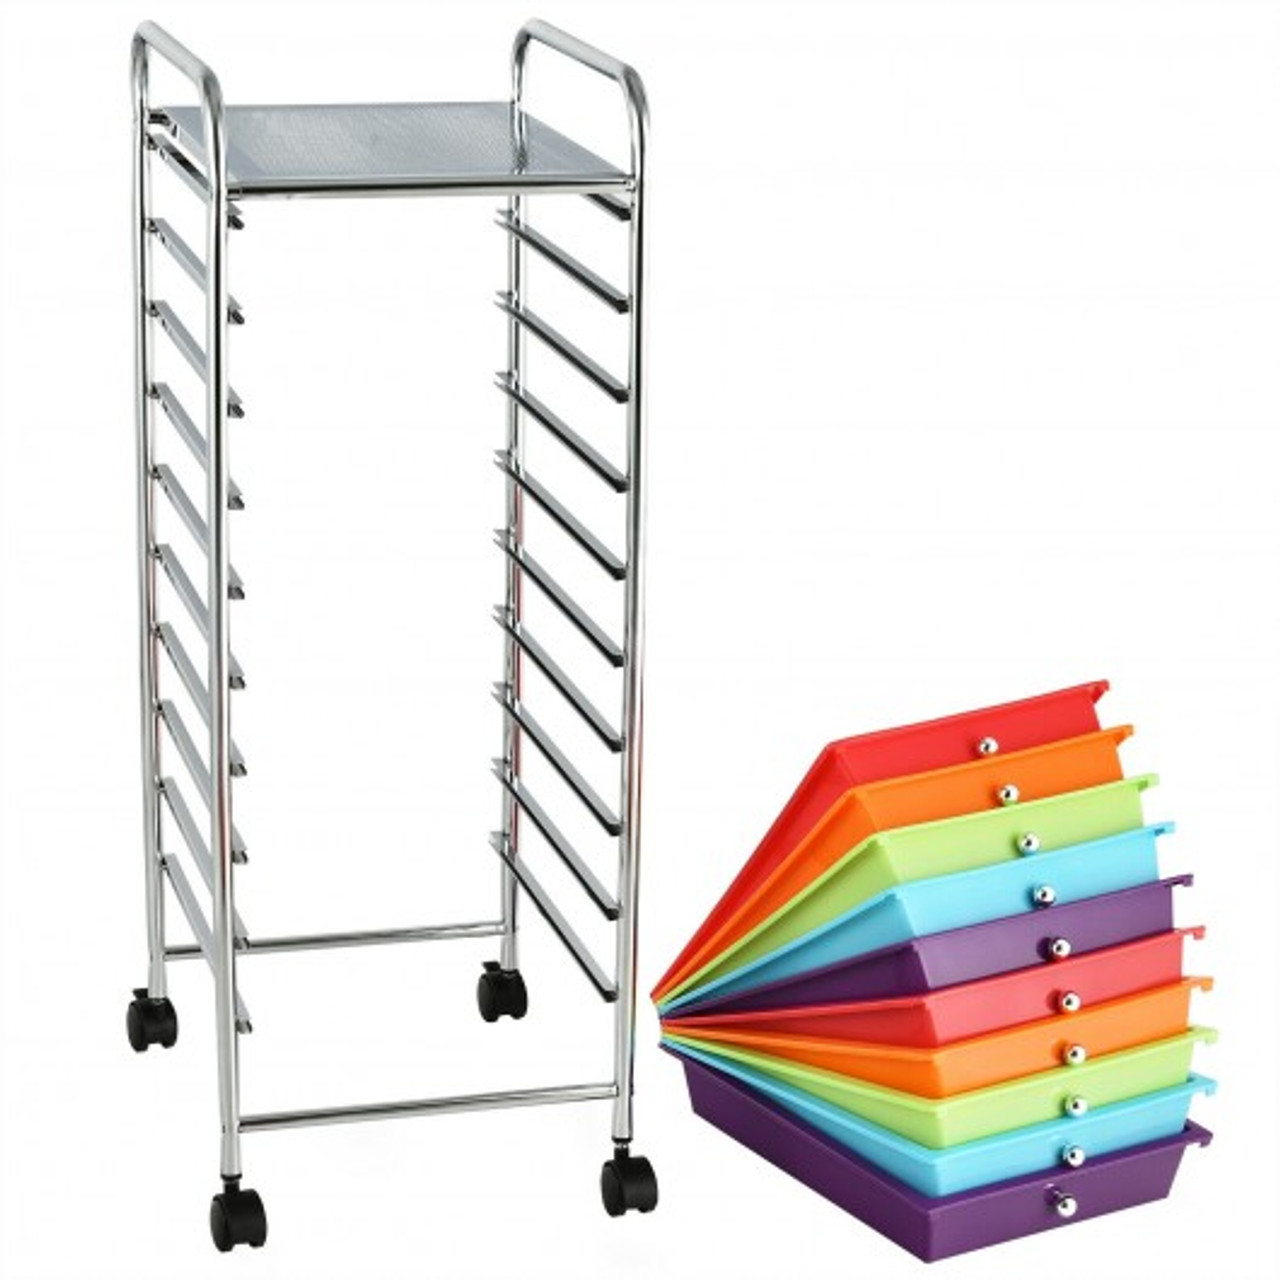 10 Drawer Rolling Storage Cart Organizer-Multicolor HW52045MT